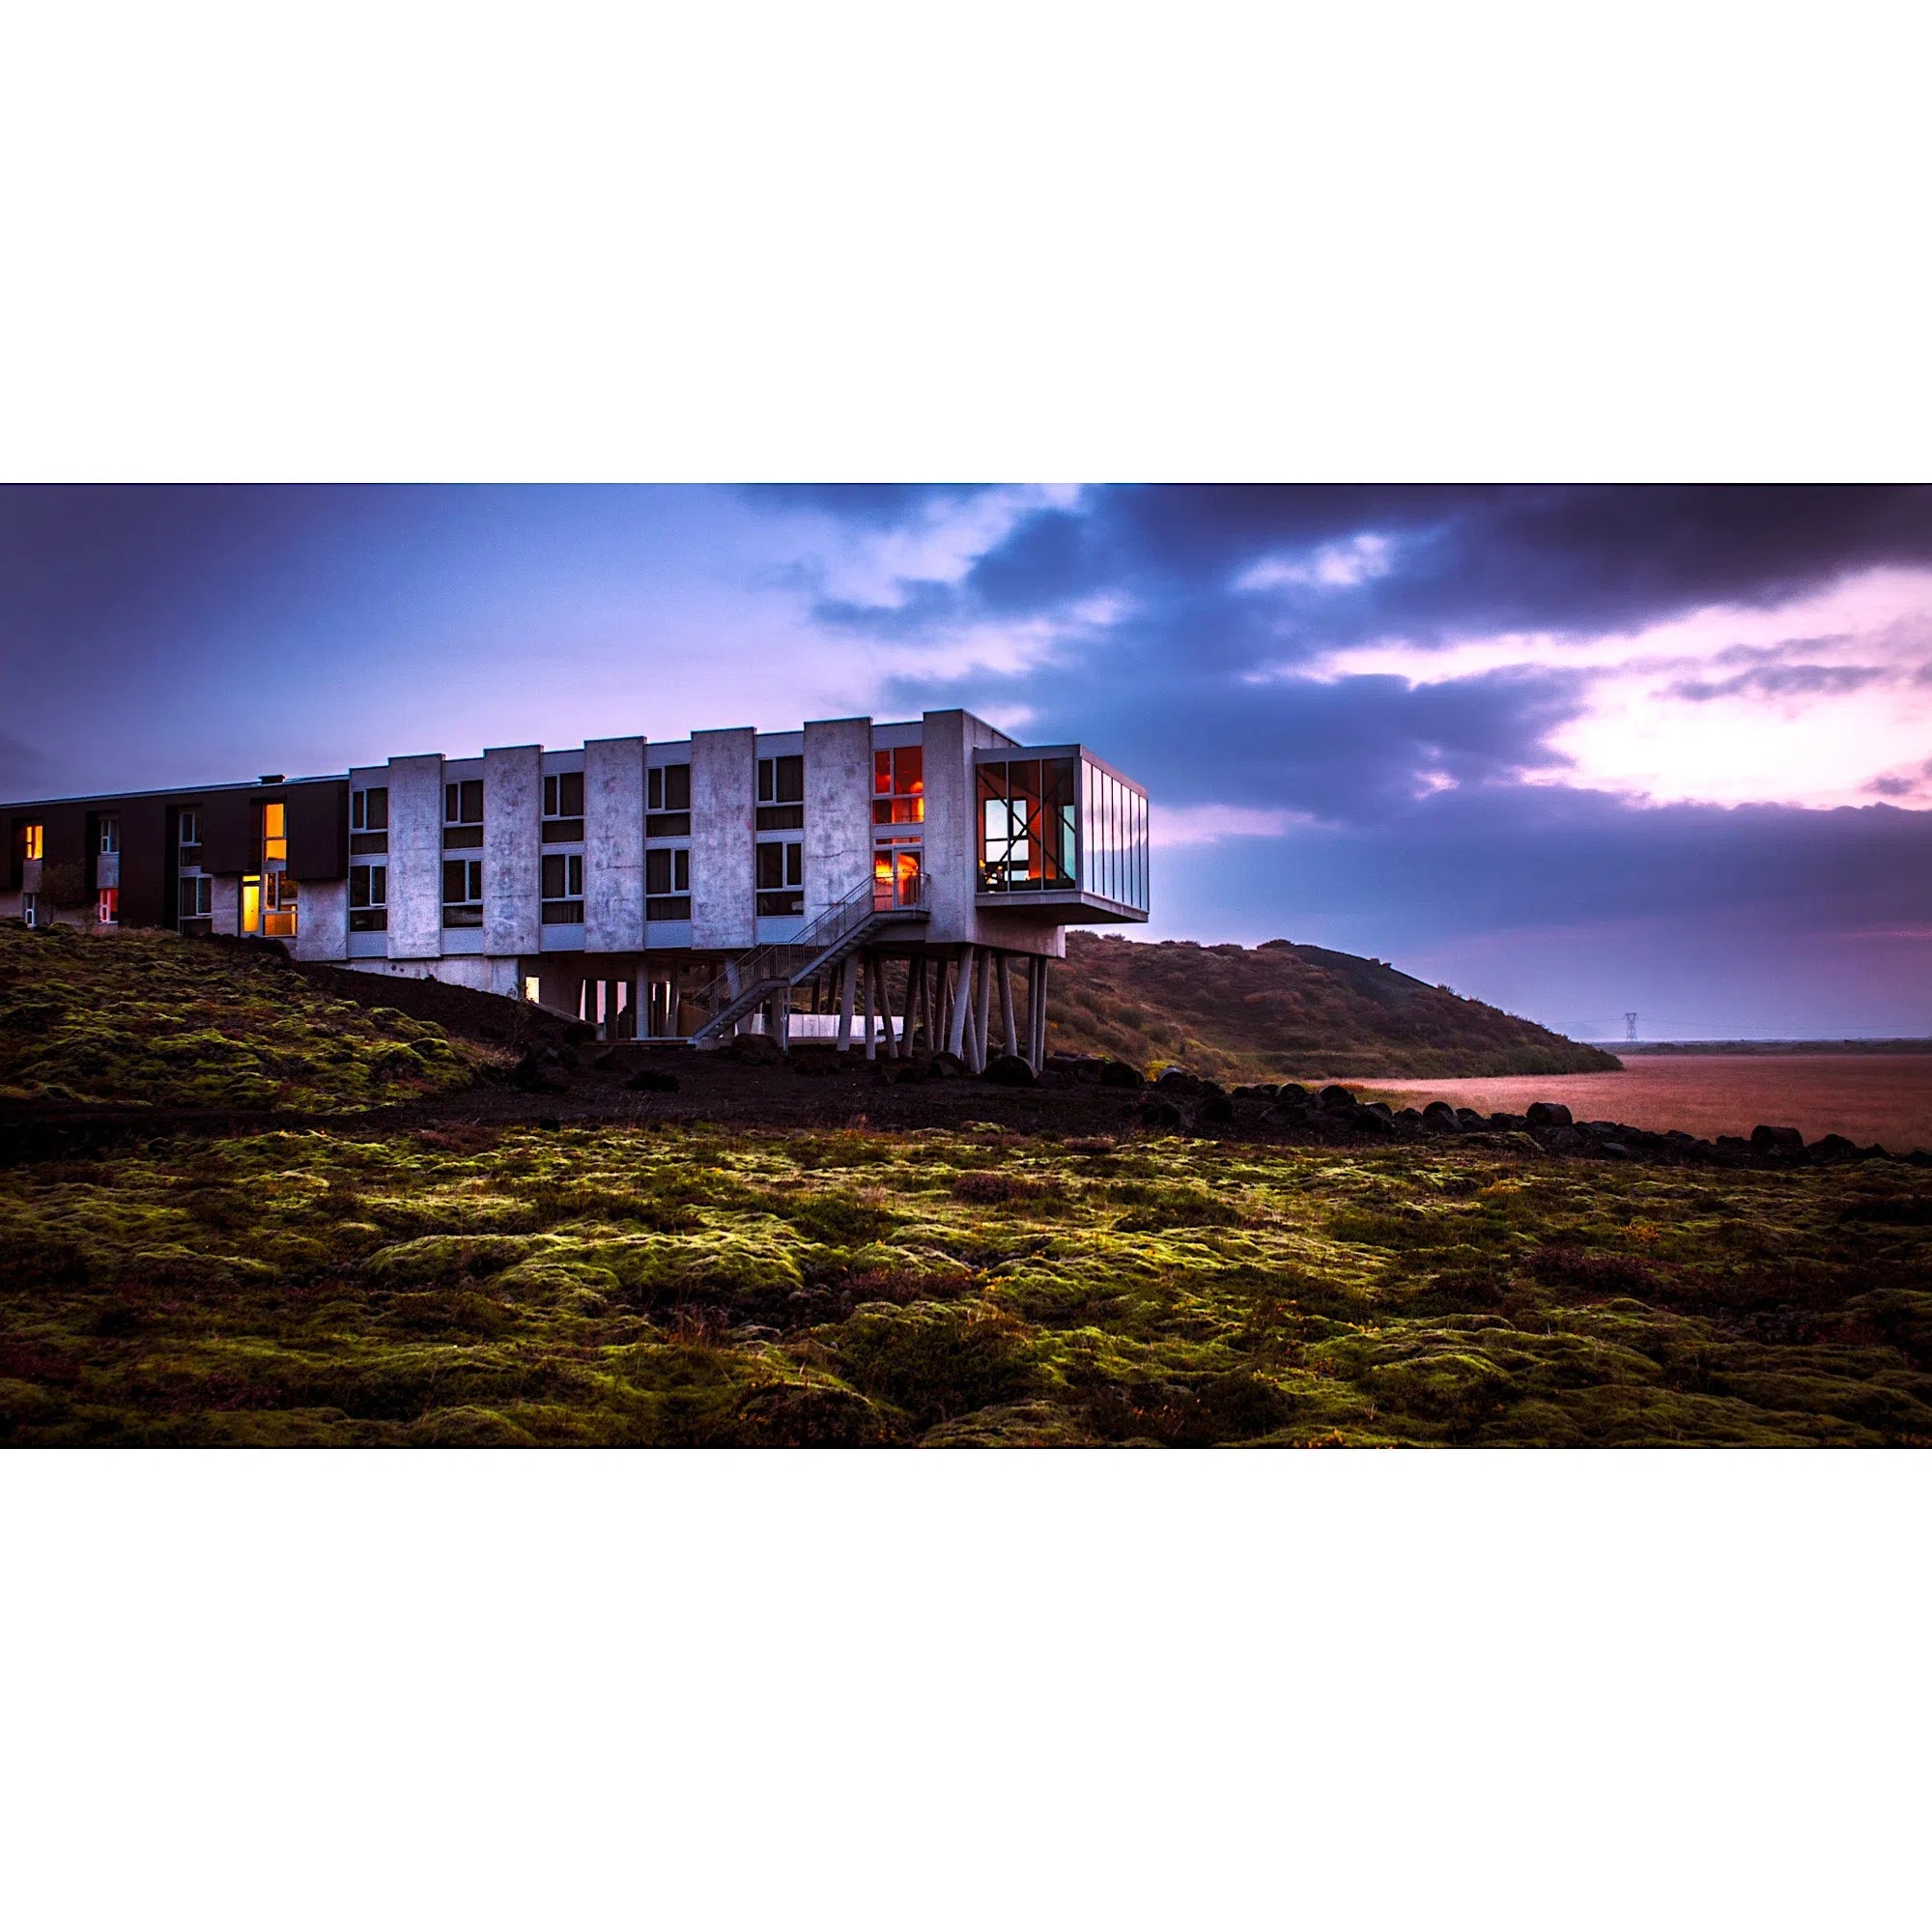 Hôtel perdu dans la nature en Islande-Imagesdartistes